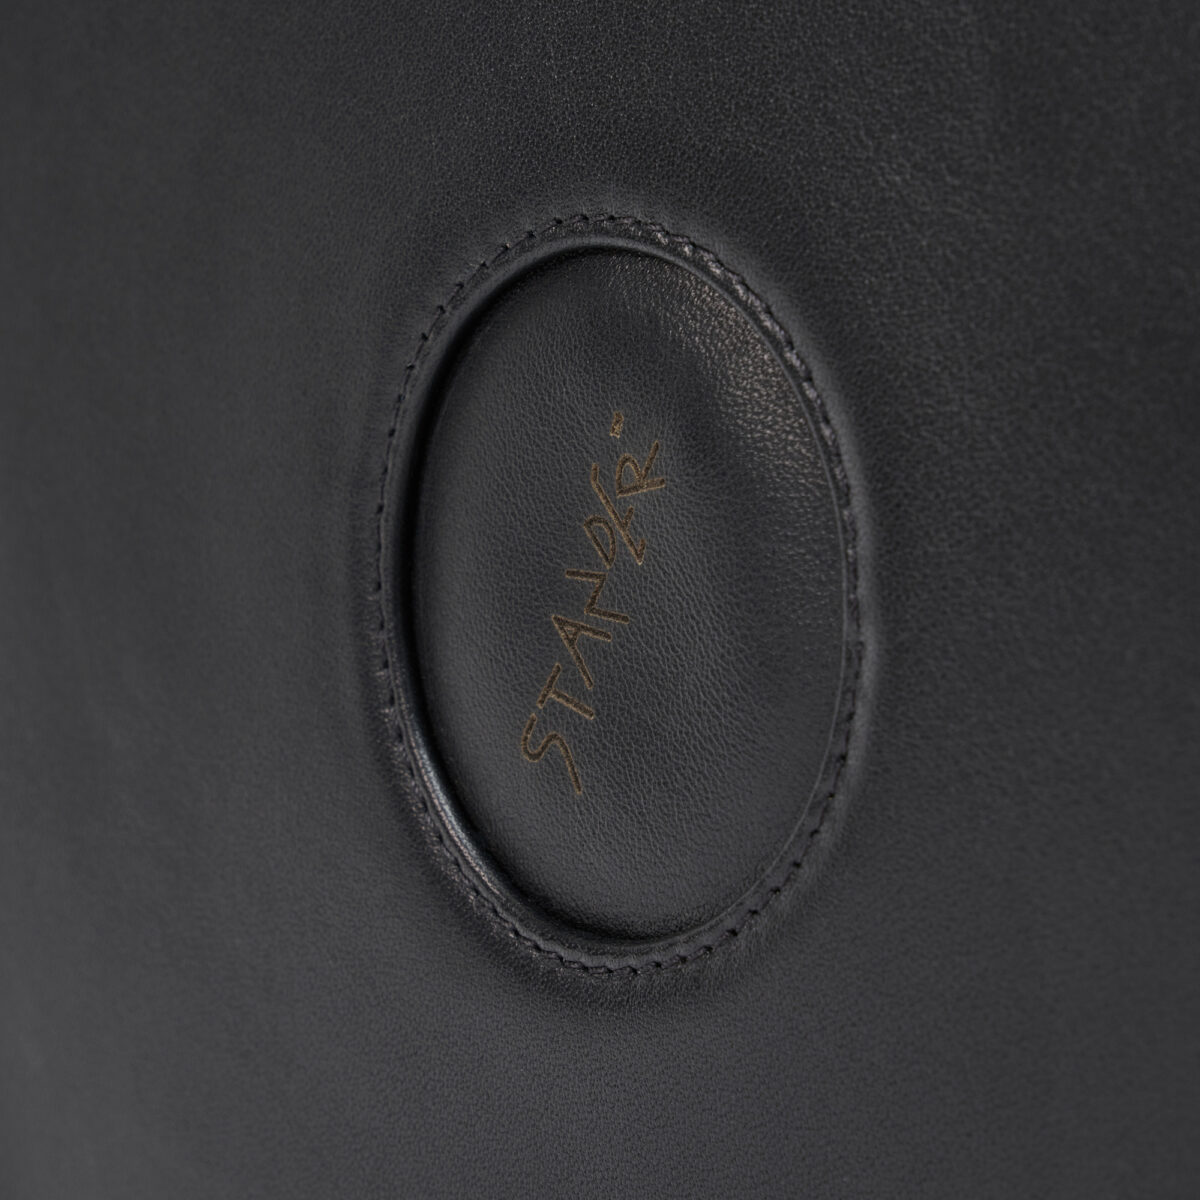 p10-leather-bag_stander-indossato1